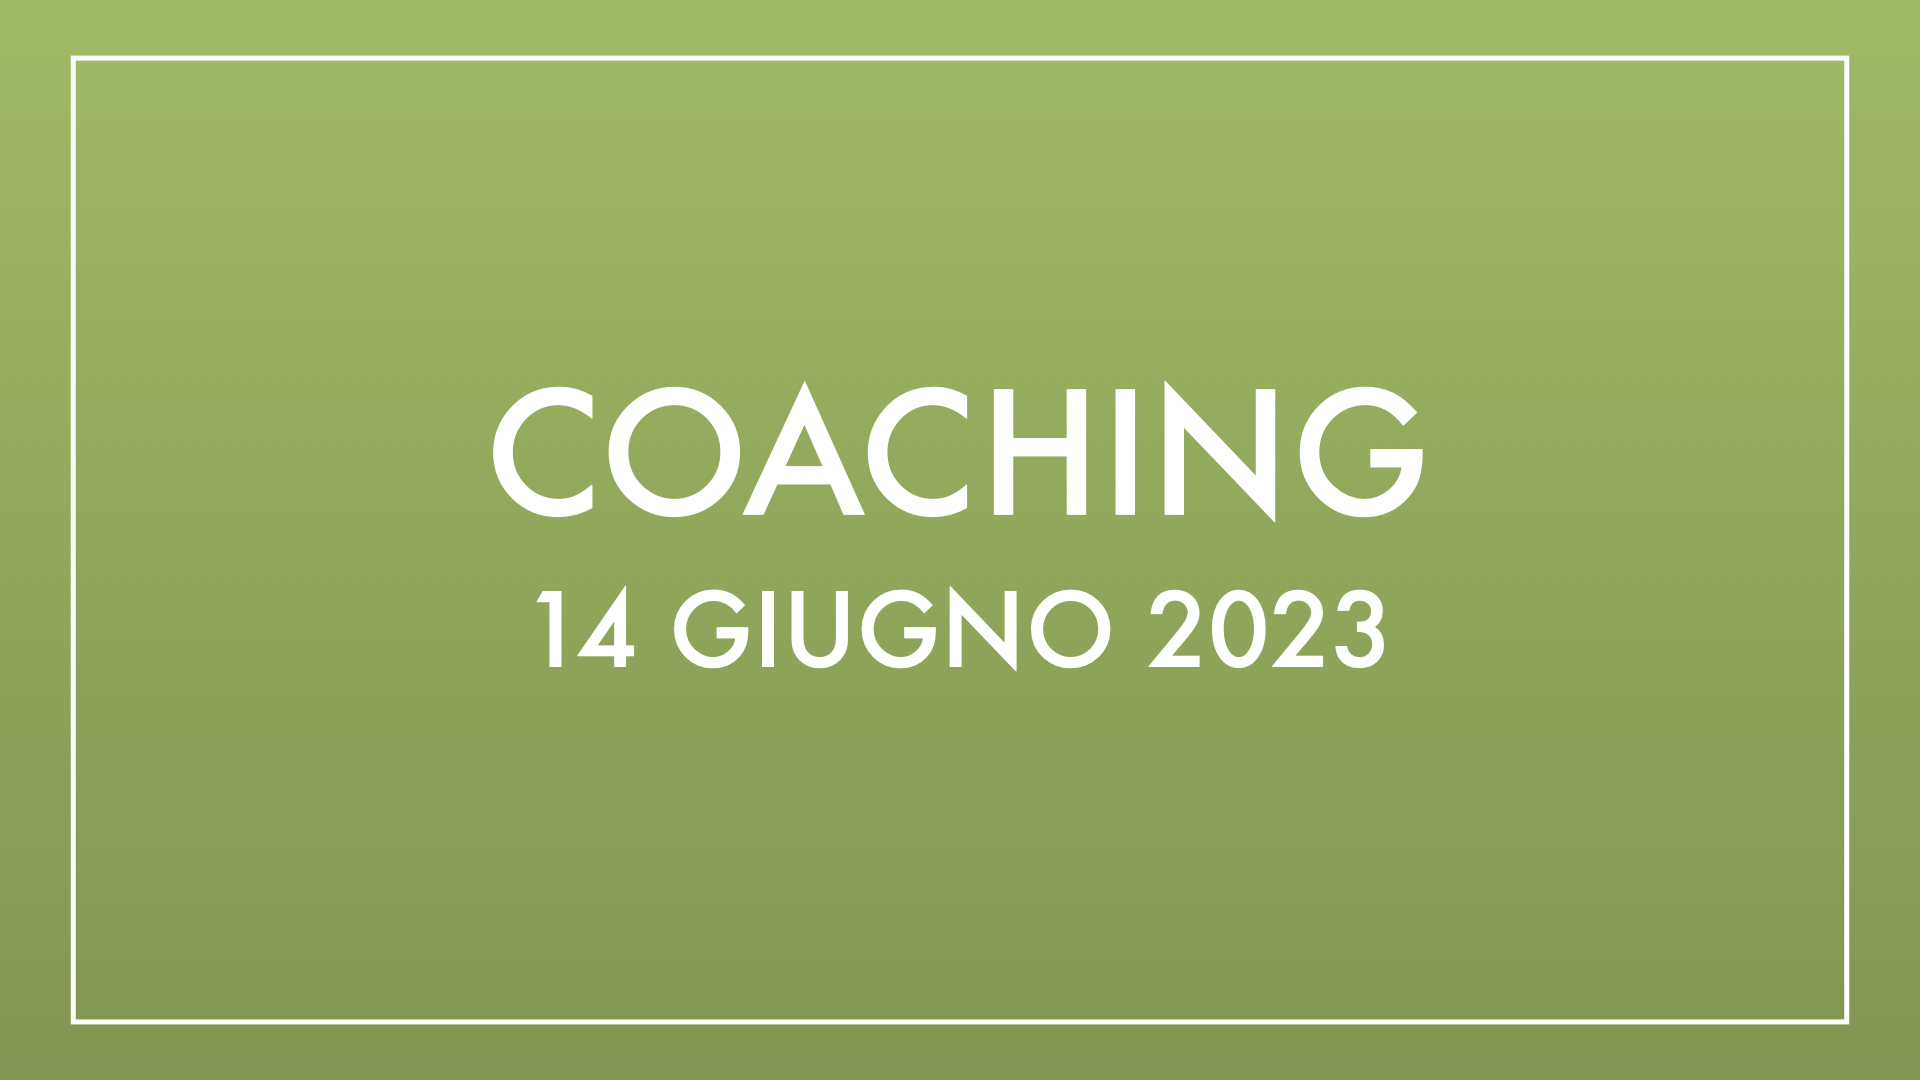 Coaching 14 giugno 2023